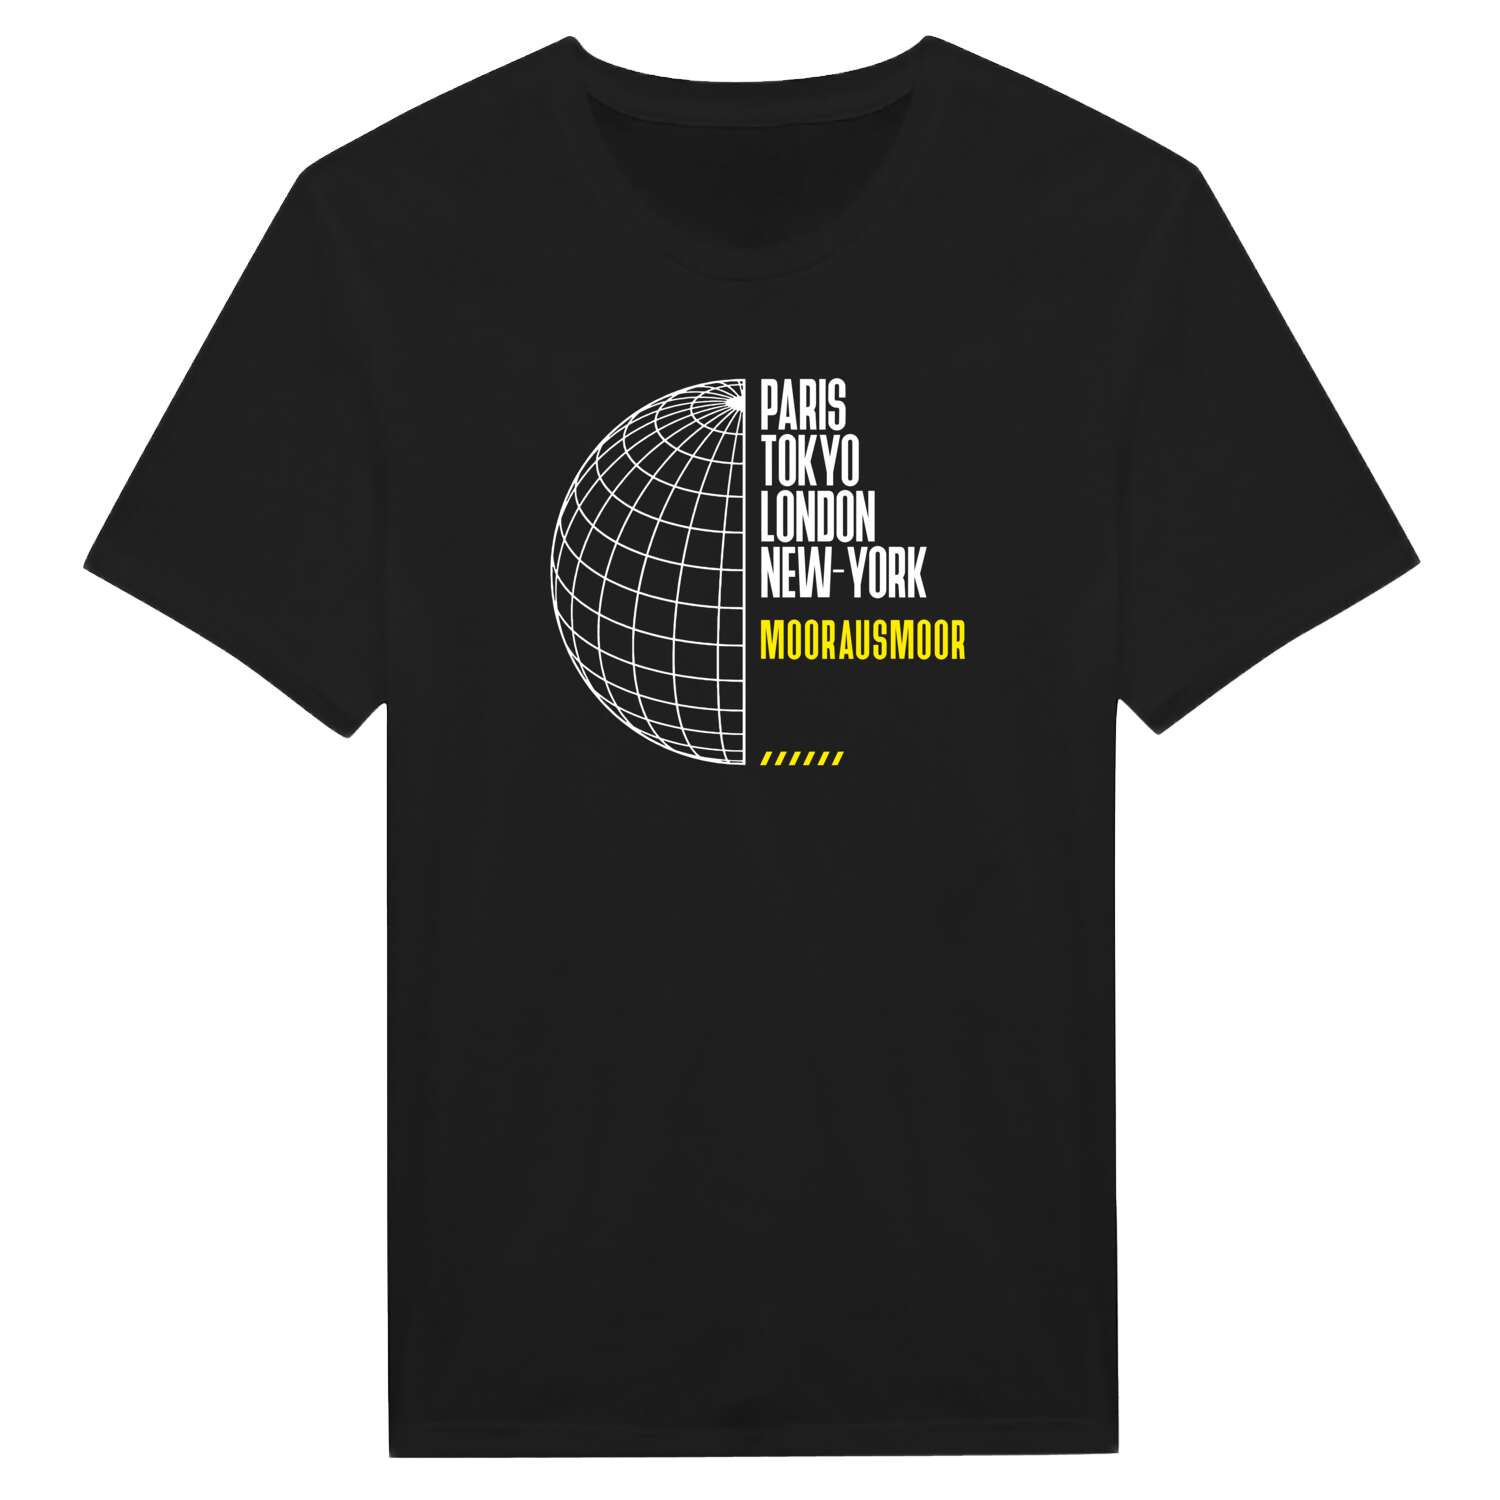 Moorausmoor T-Shirt »Paris Tokyo London«